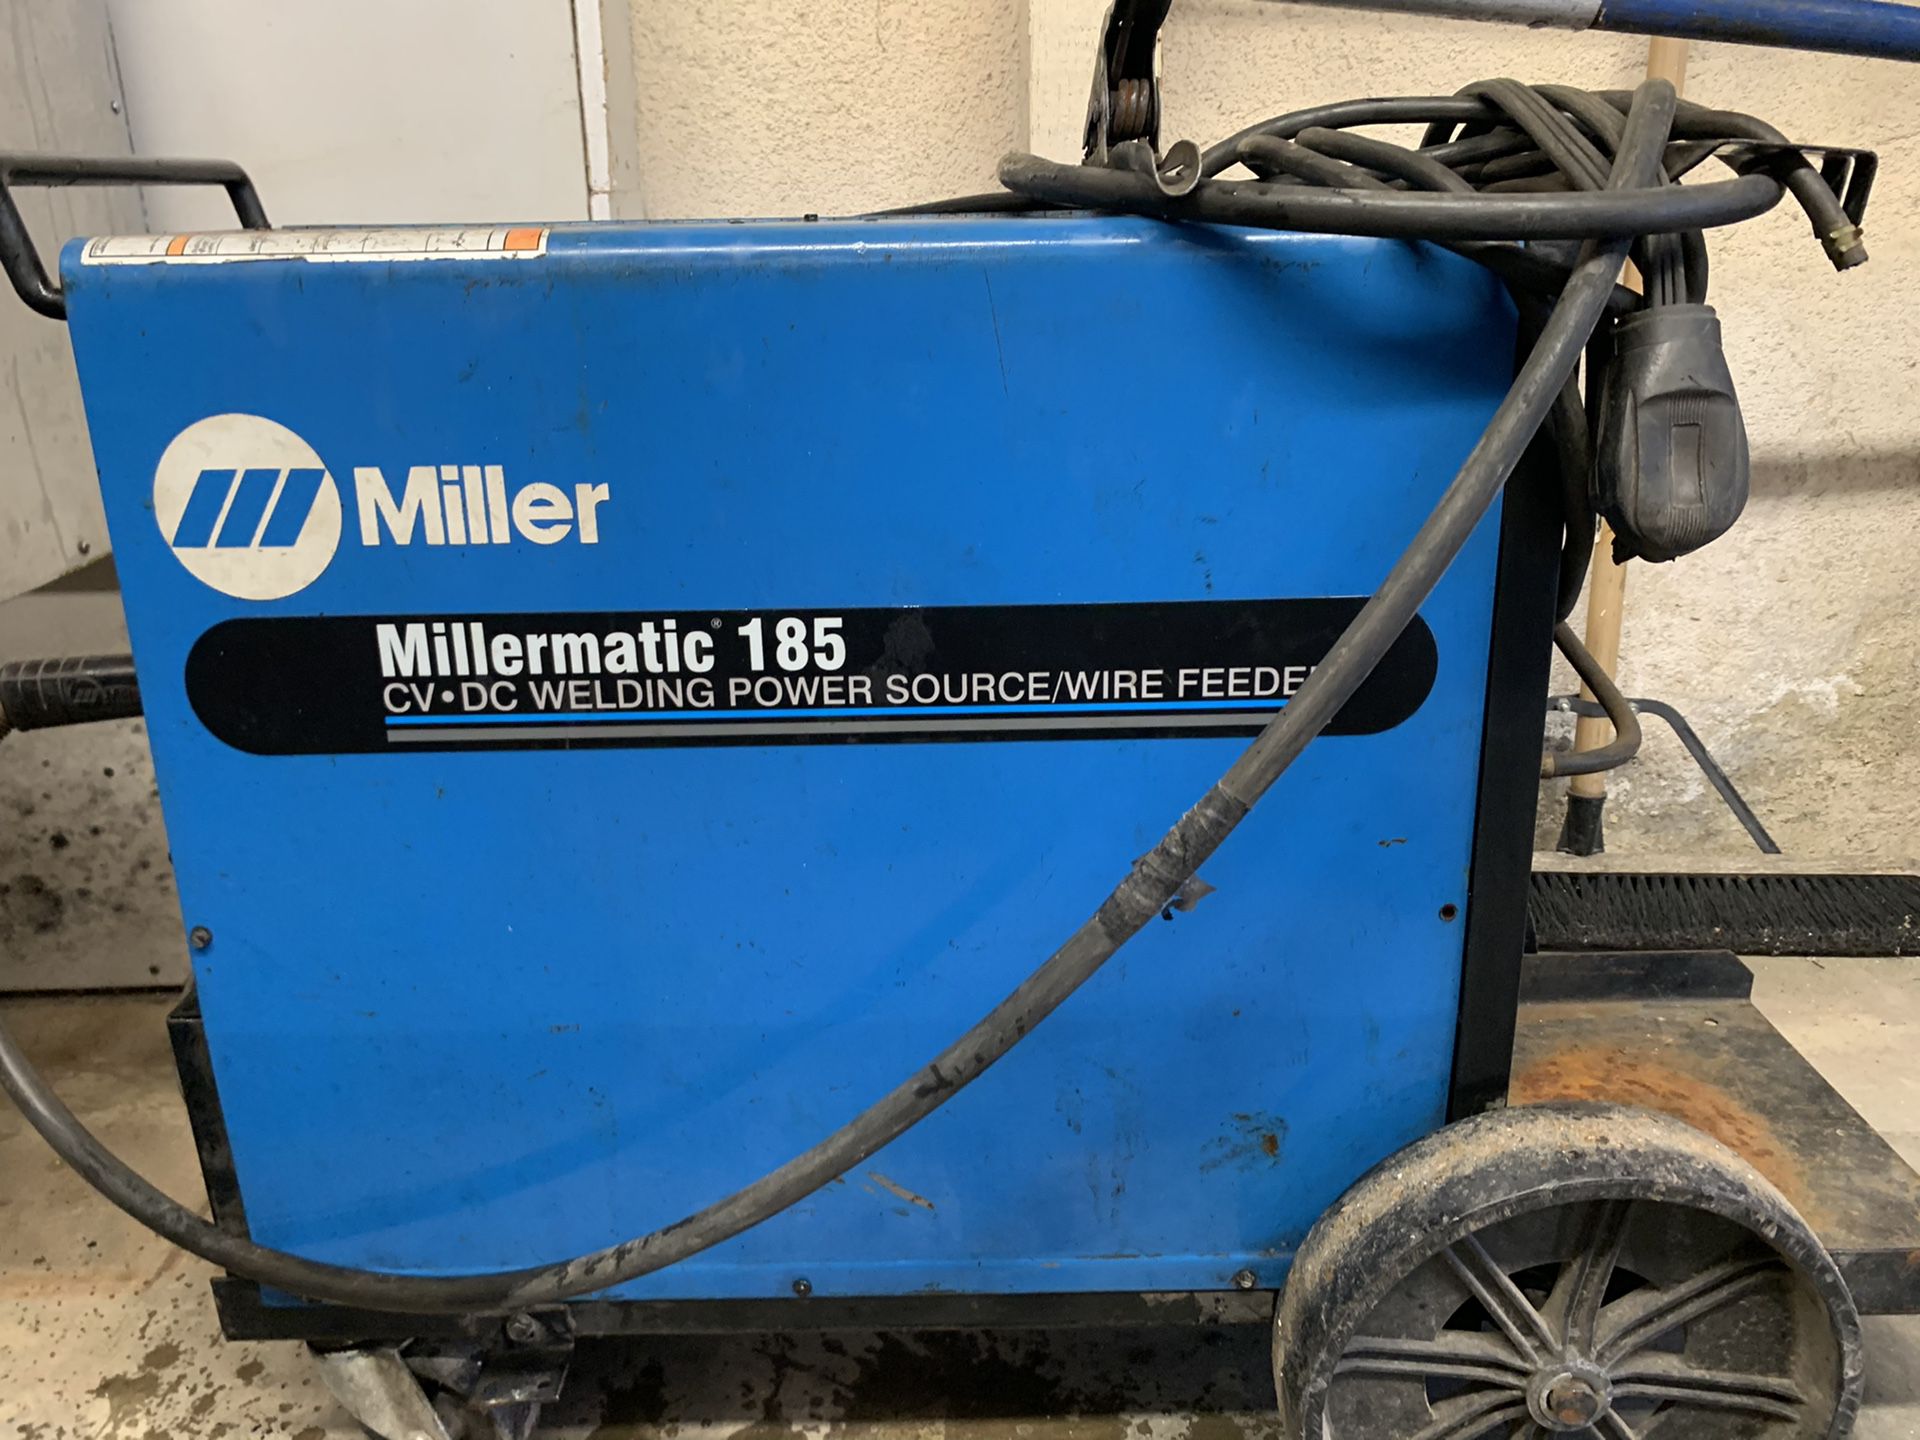 Miller millermatic 185